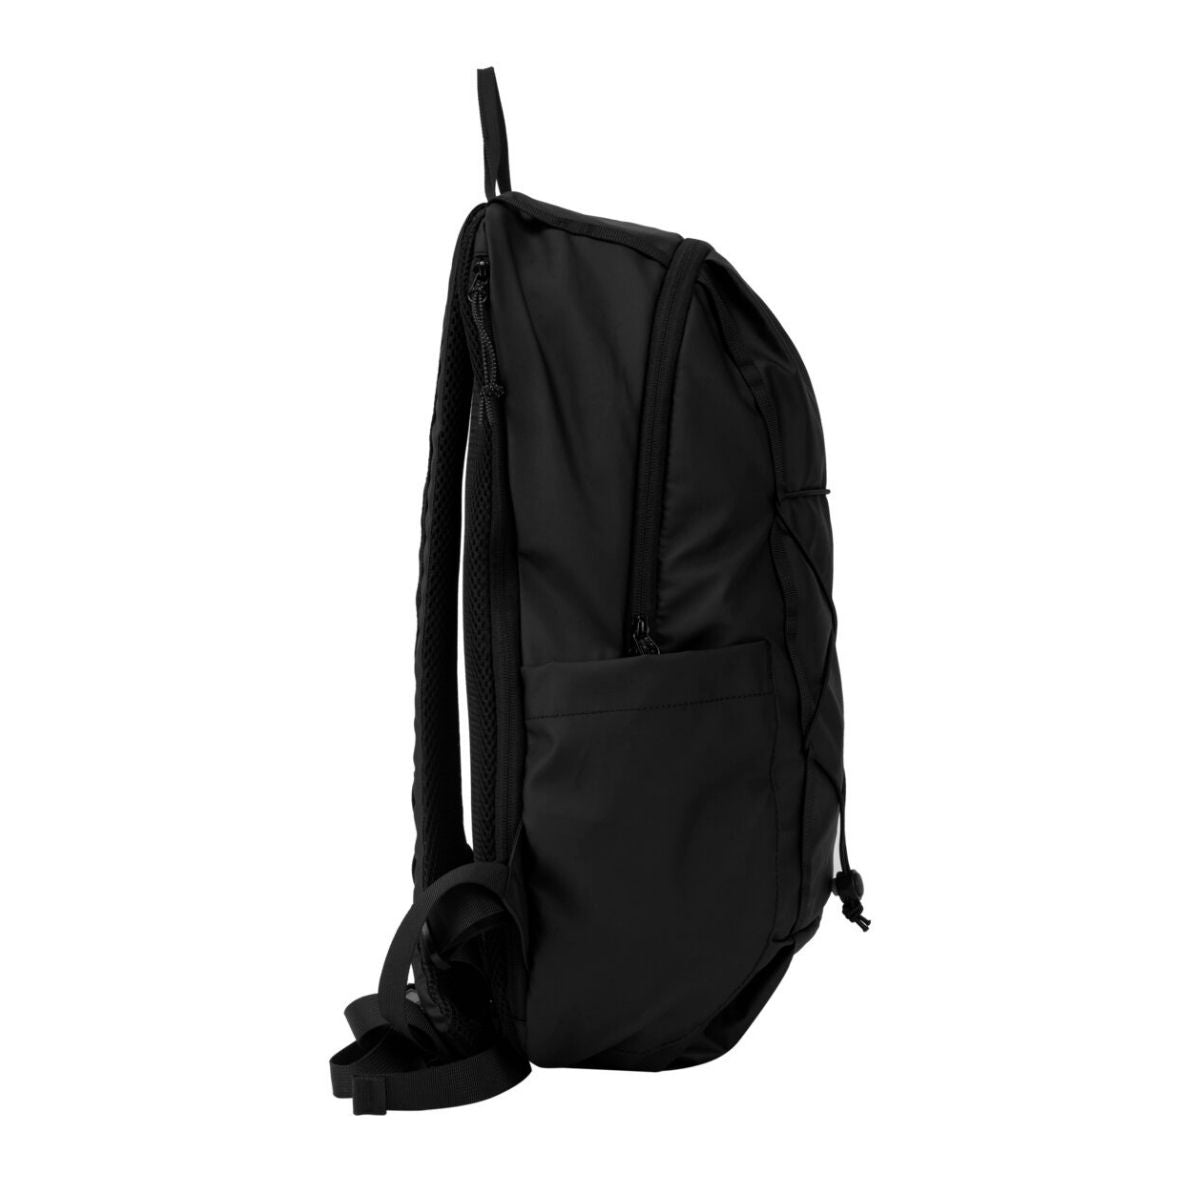 Keswik Zip Top Backpack 22L Black - Rucksack